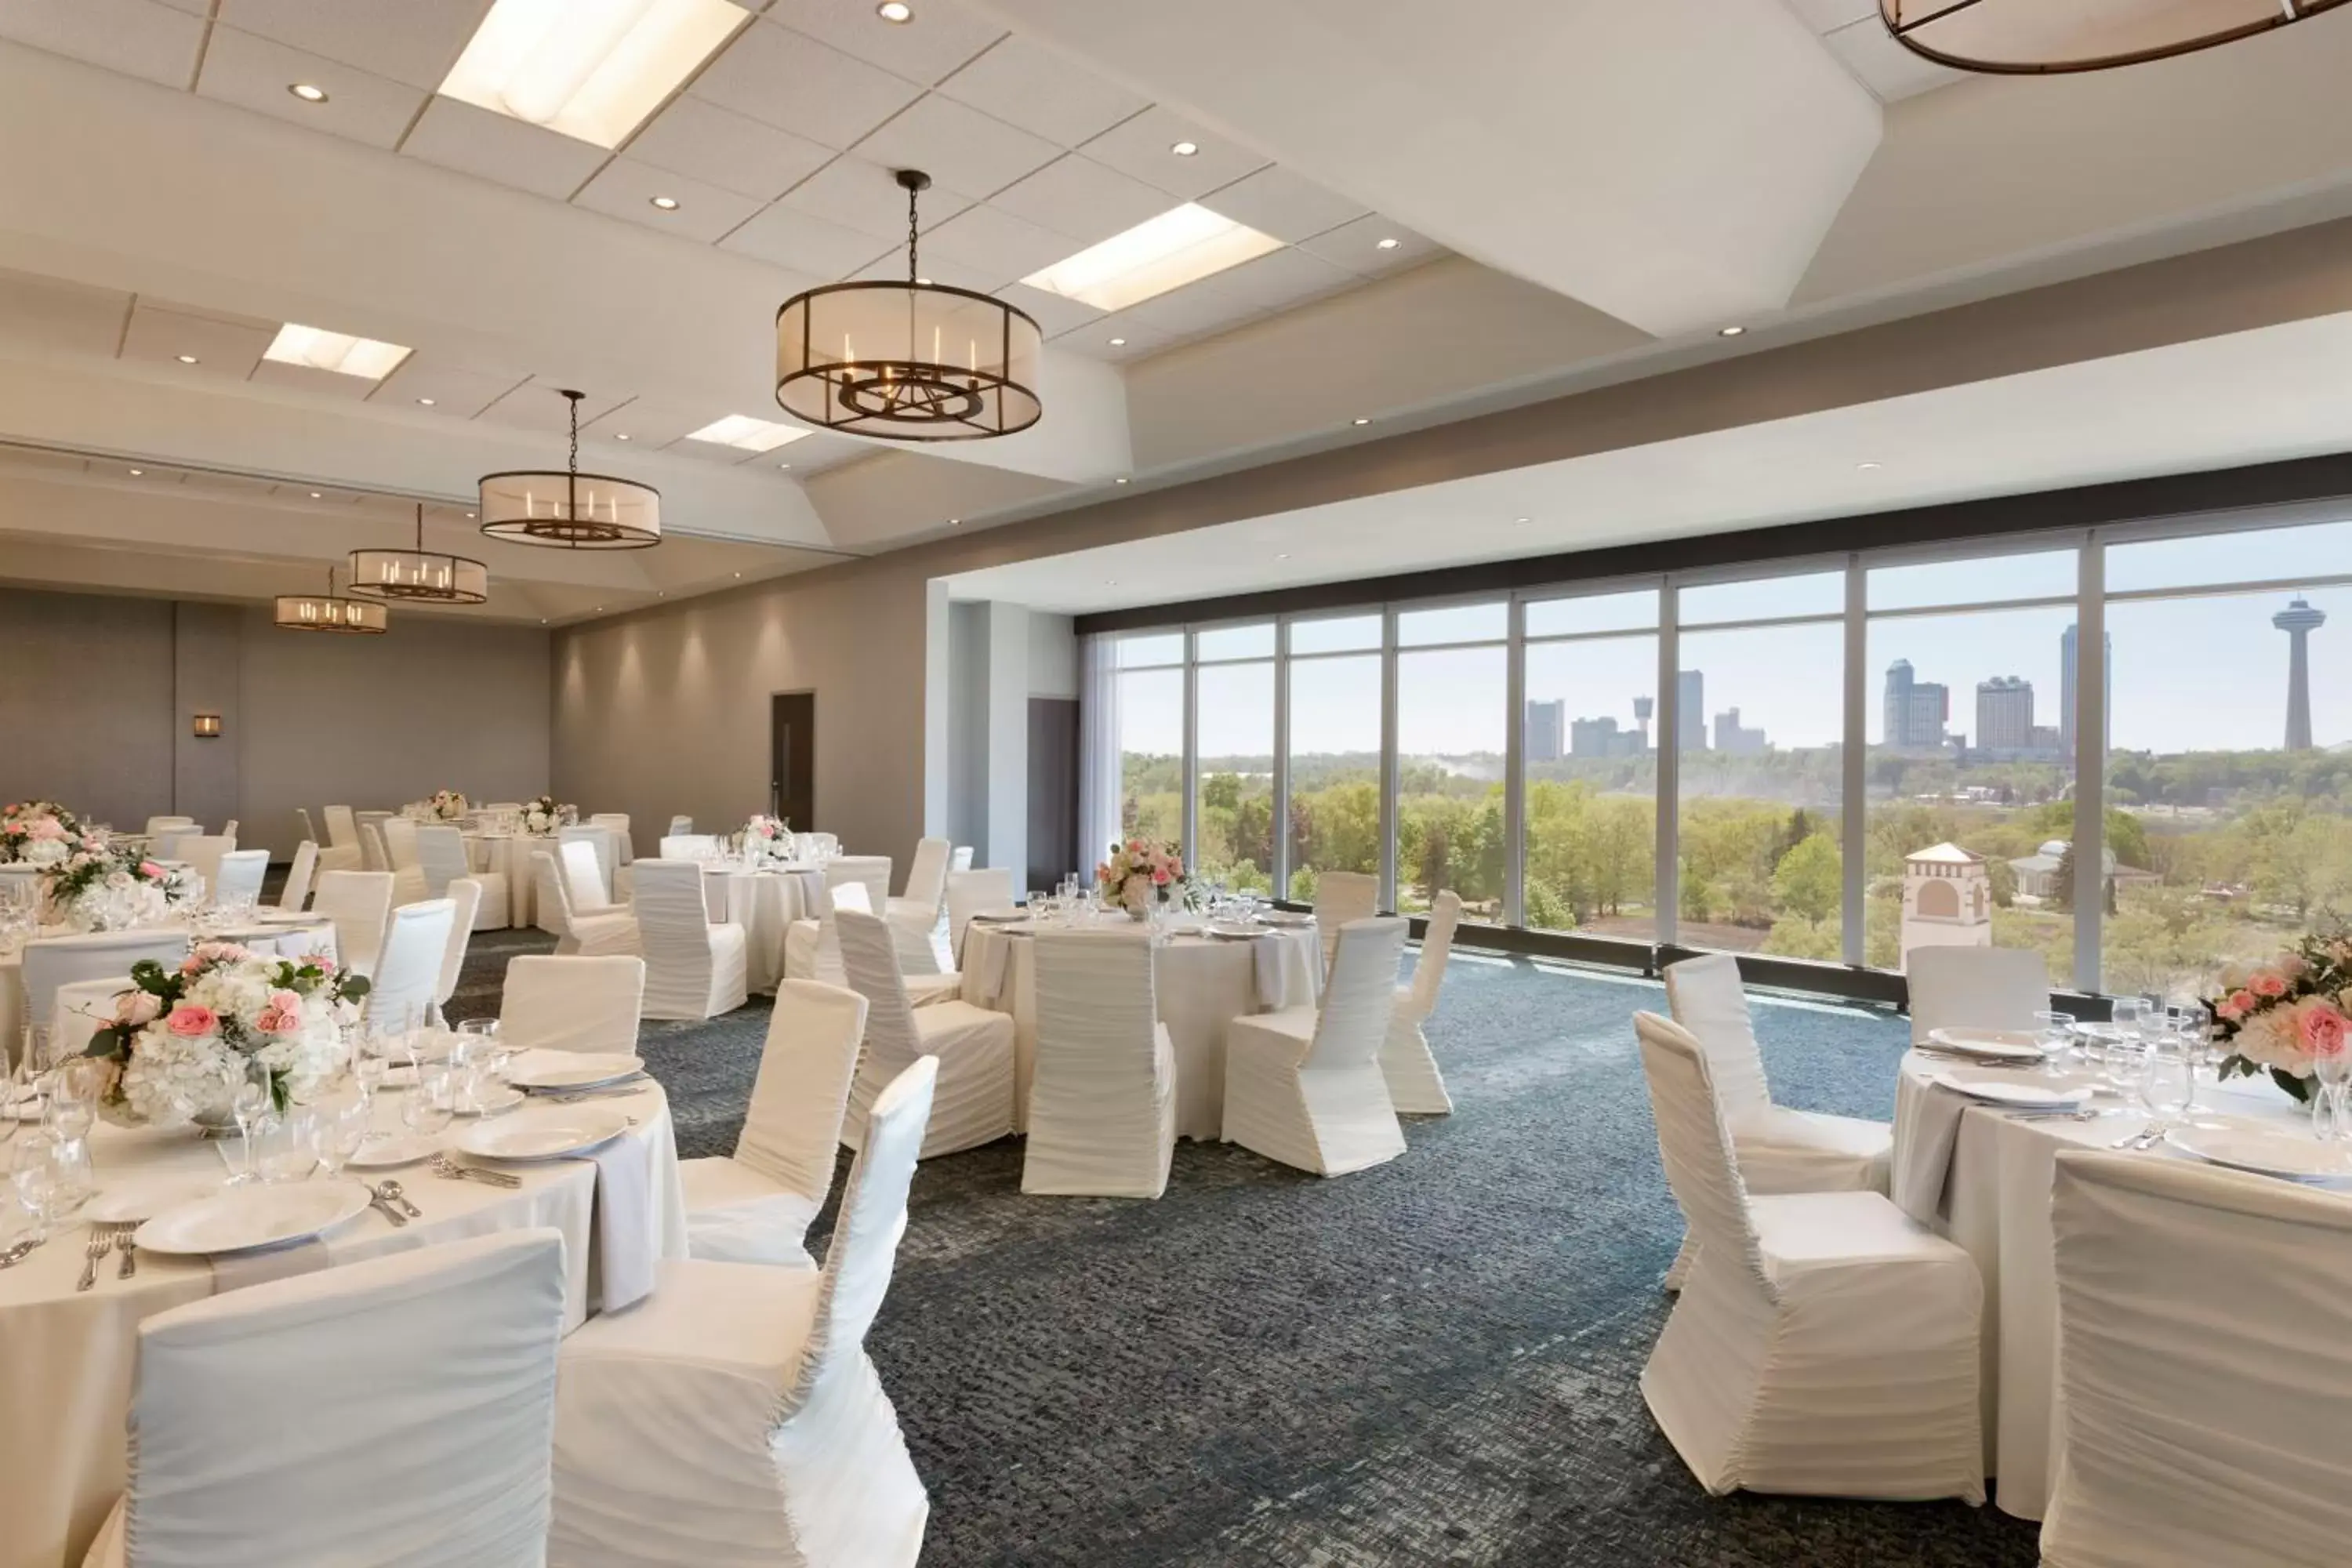 Banquet/Function facilities, Banquet Facilities in Hyatt Place Niagara Falls